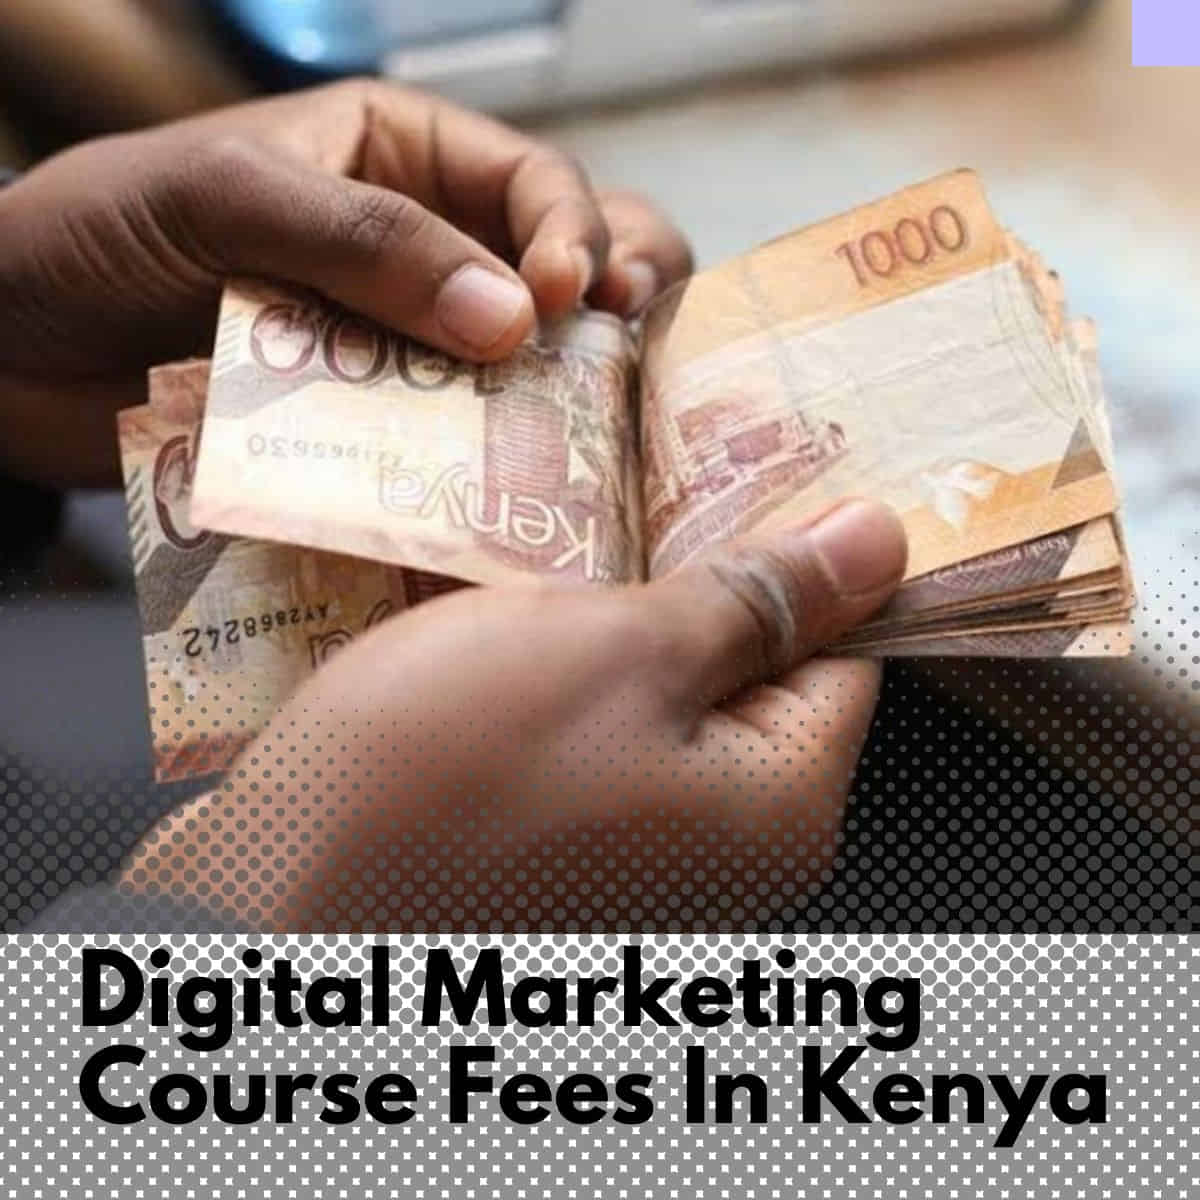 Digital Marketing course fees in Kenya